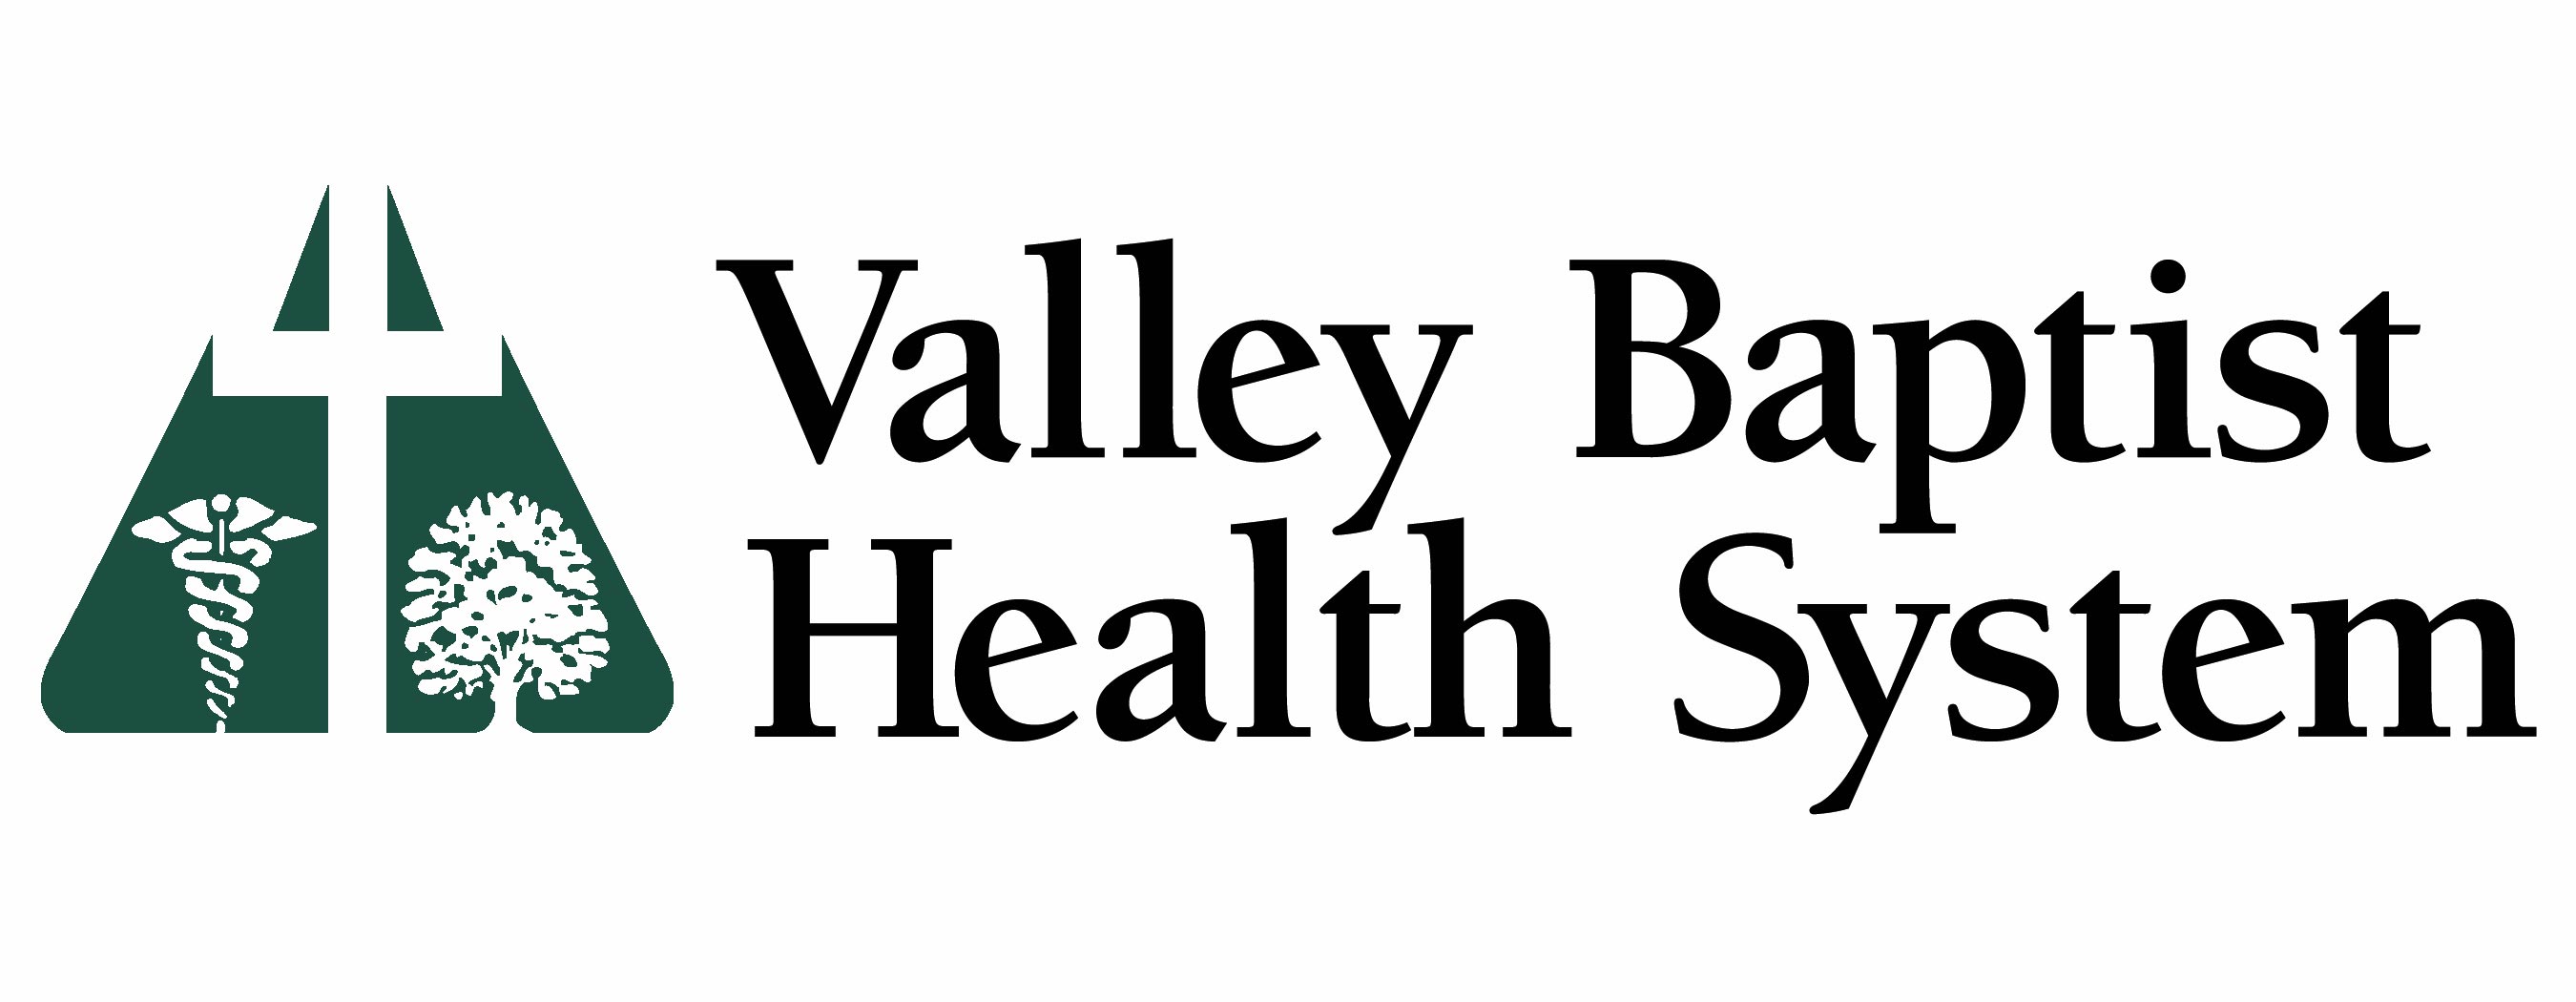 Valley Baptist Health System